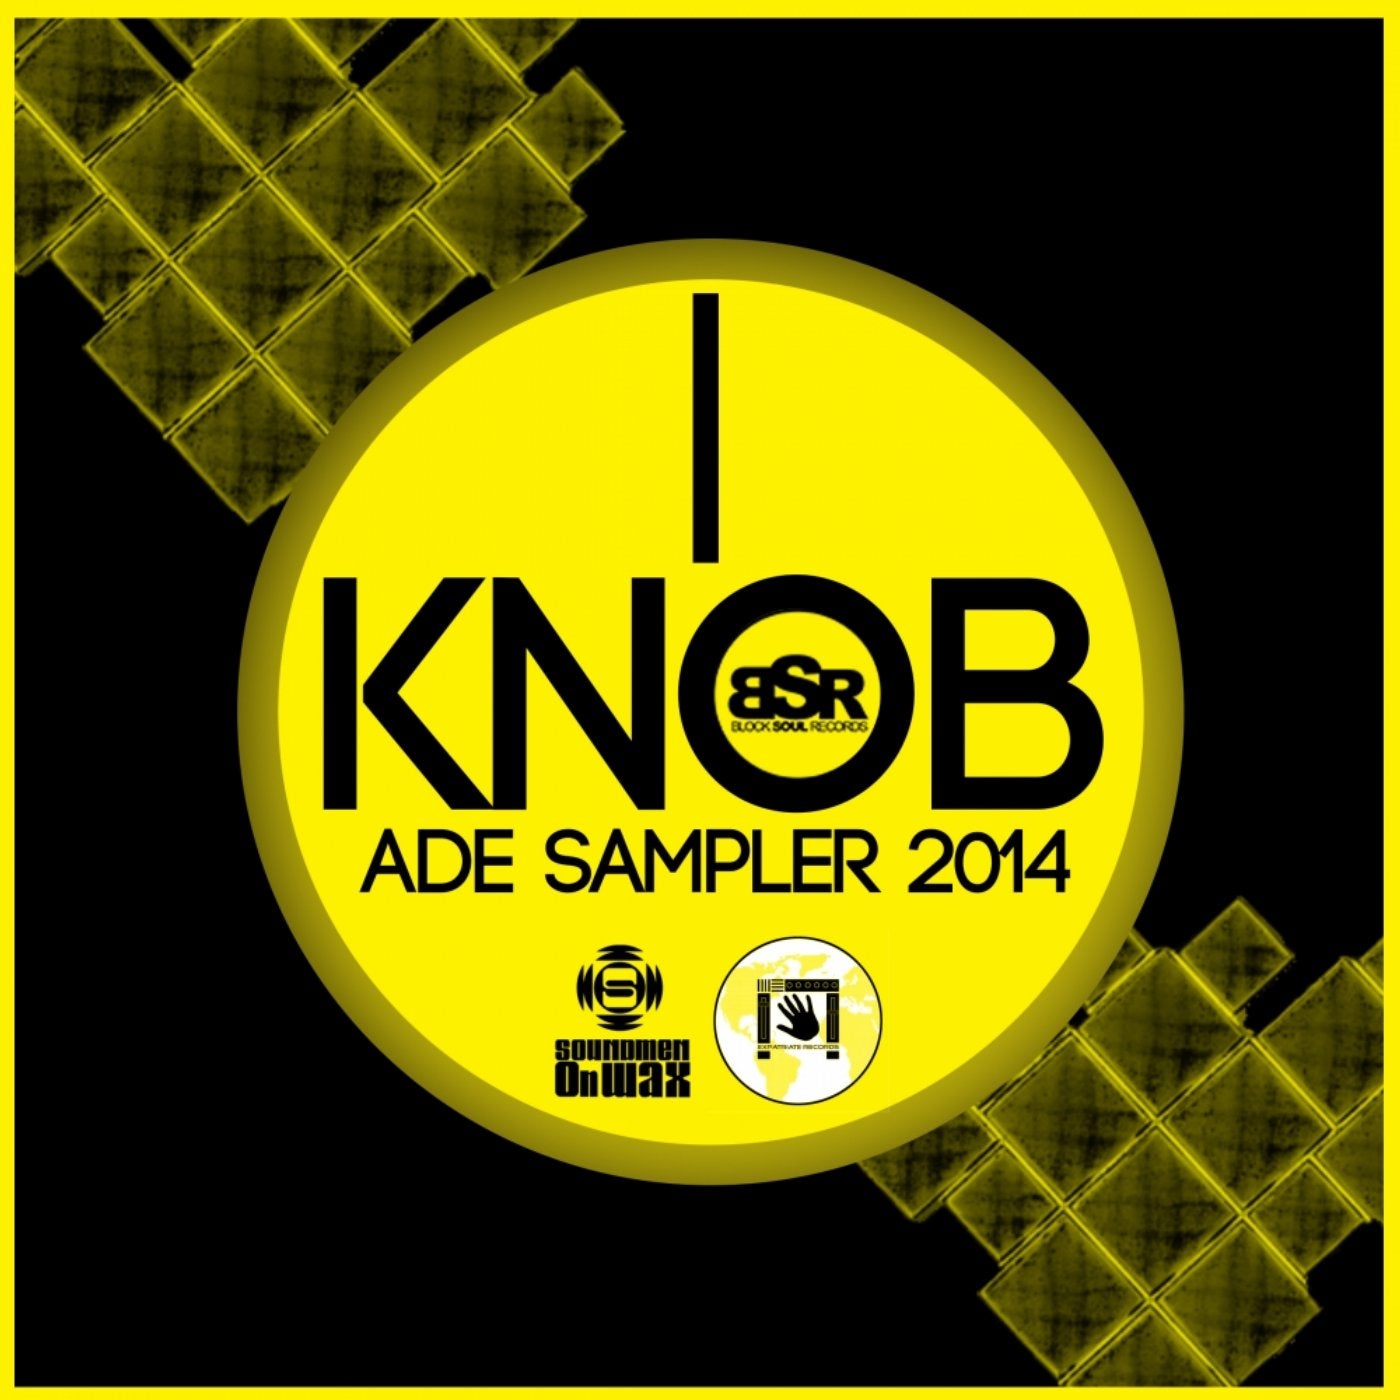 Knob Ade Sampler 2014